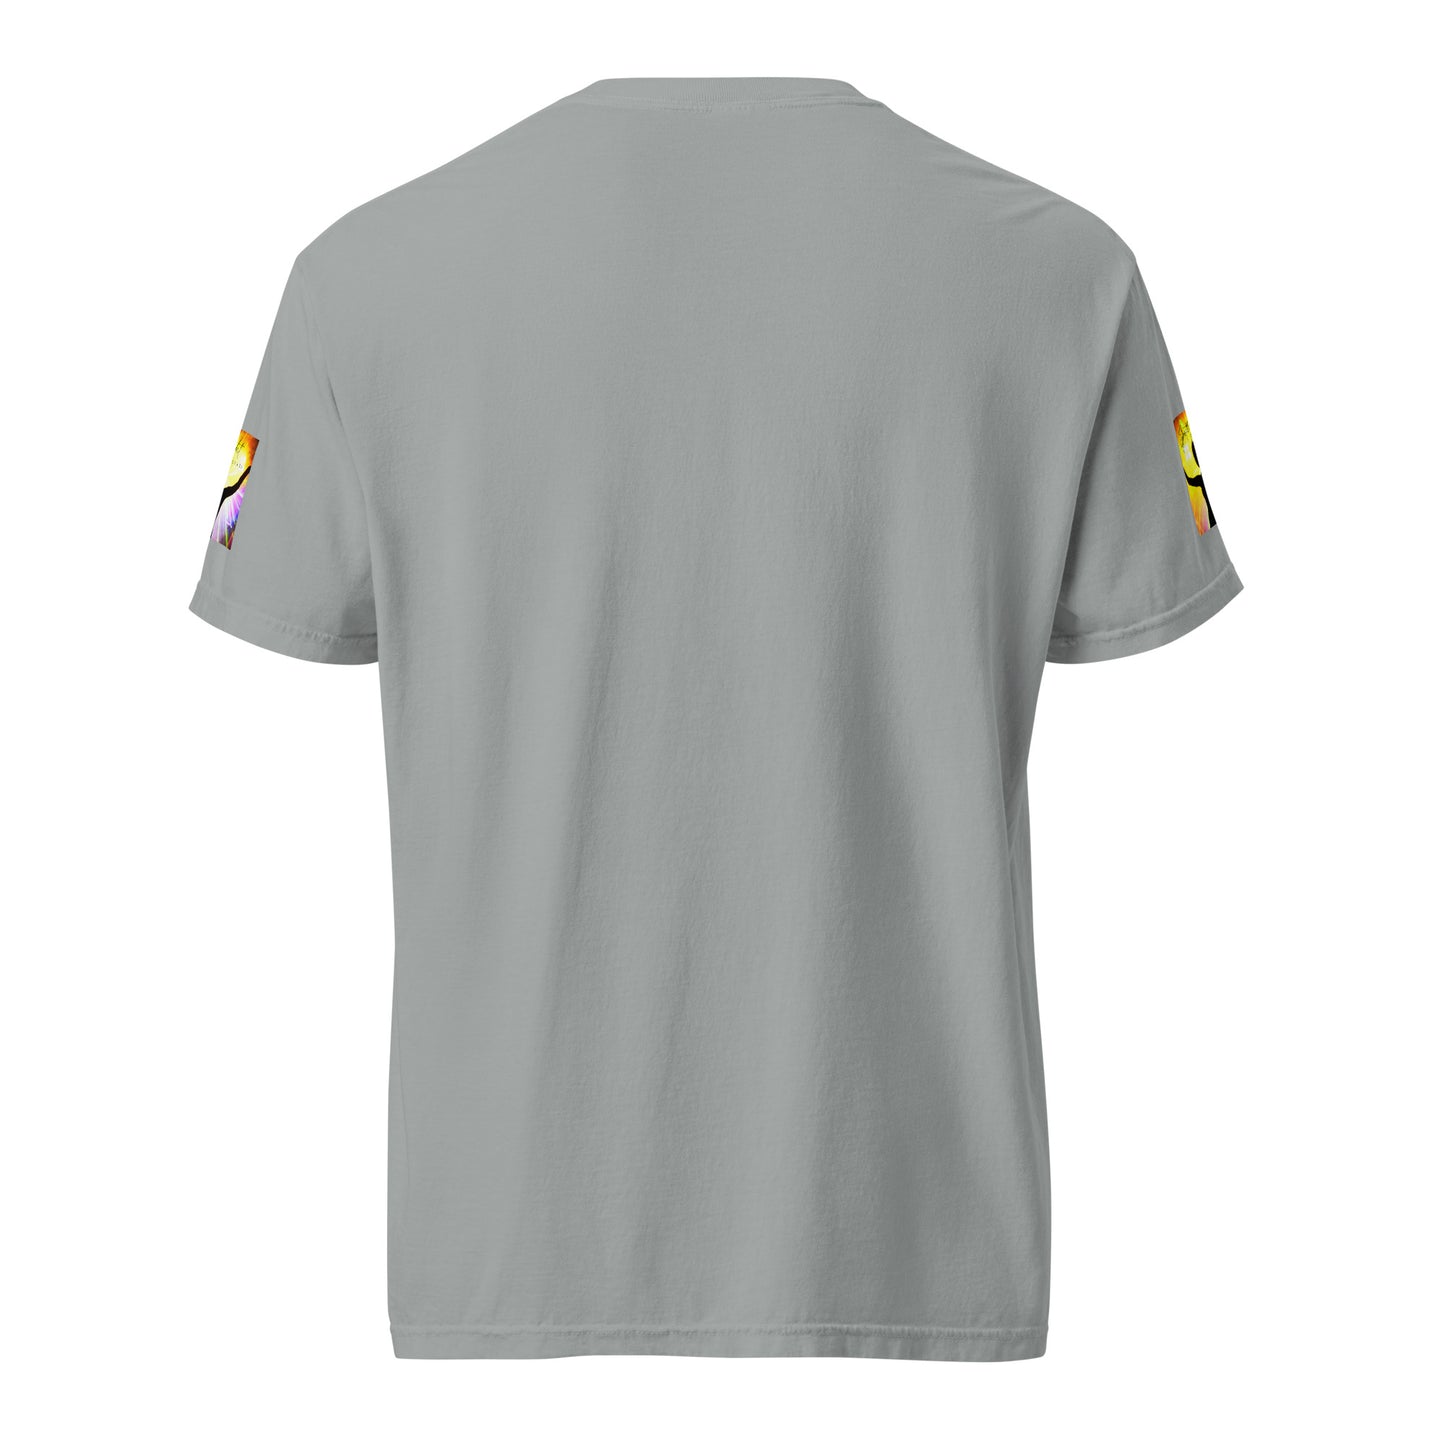 Tell 'Em/Fan Heavyweight Unisex T-Shirt w/Signature SpotlYght Tags - Yellow